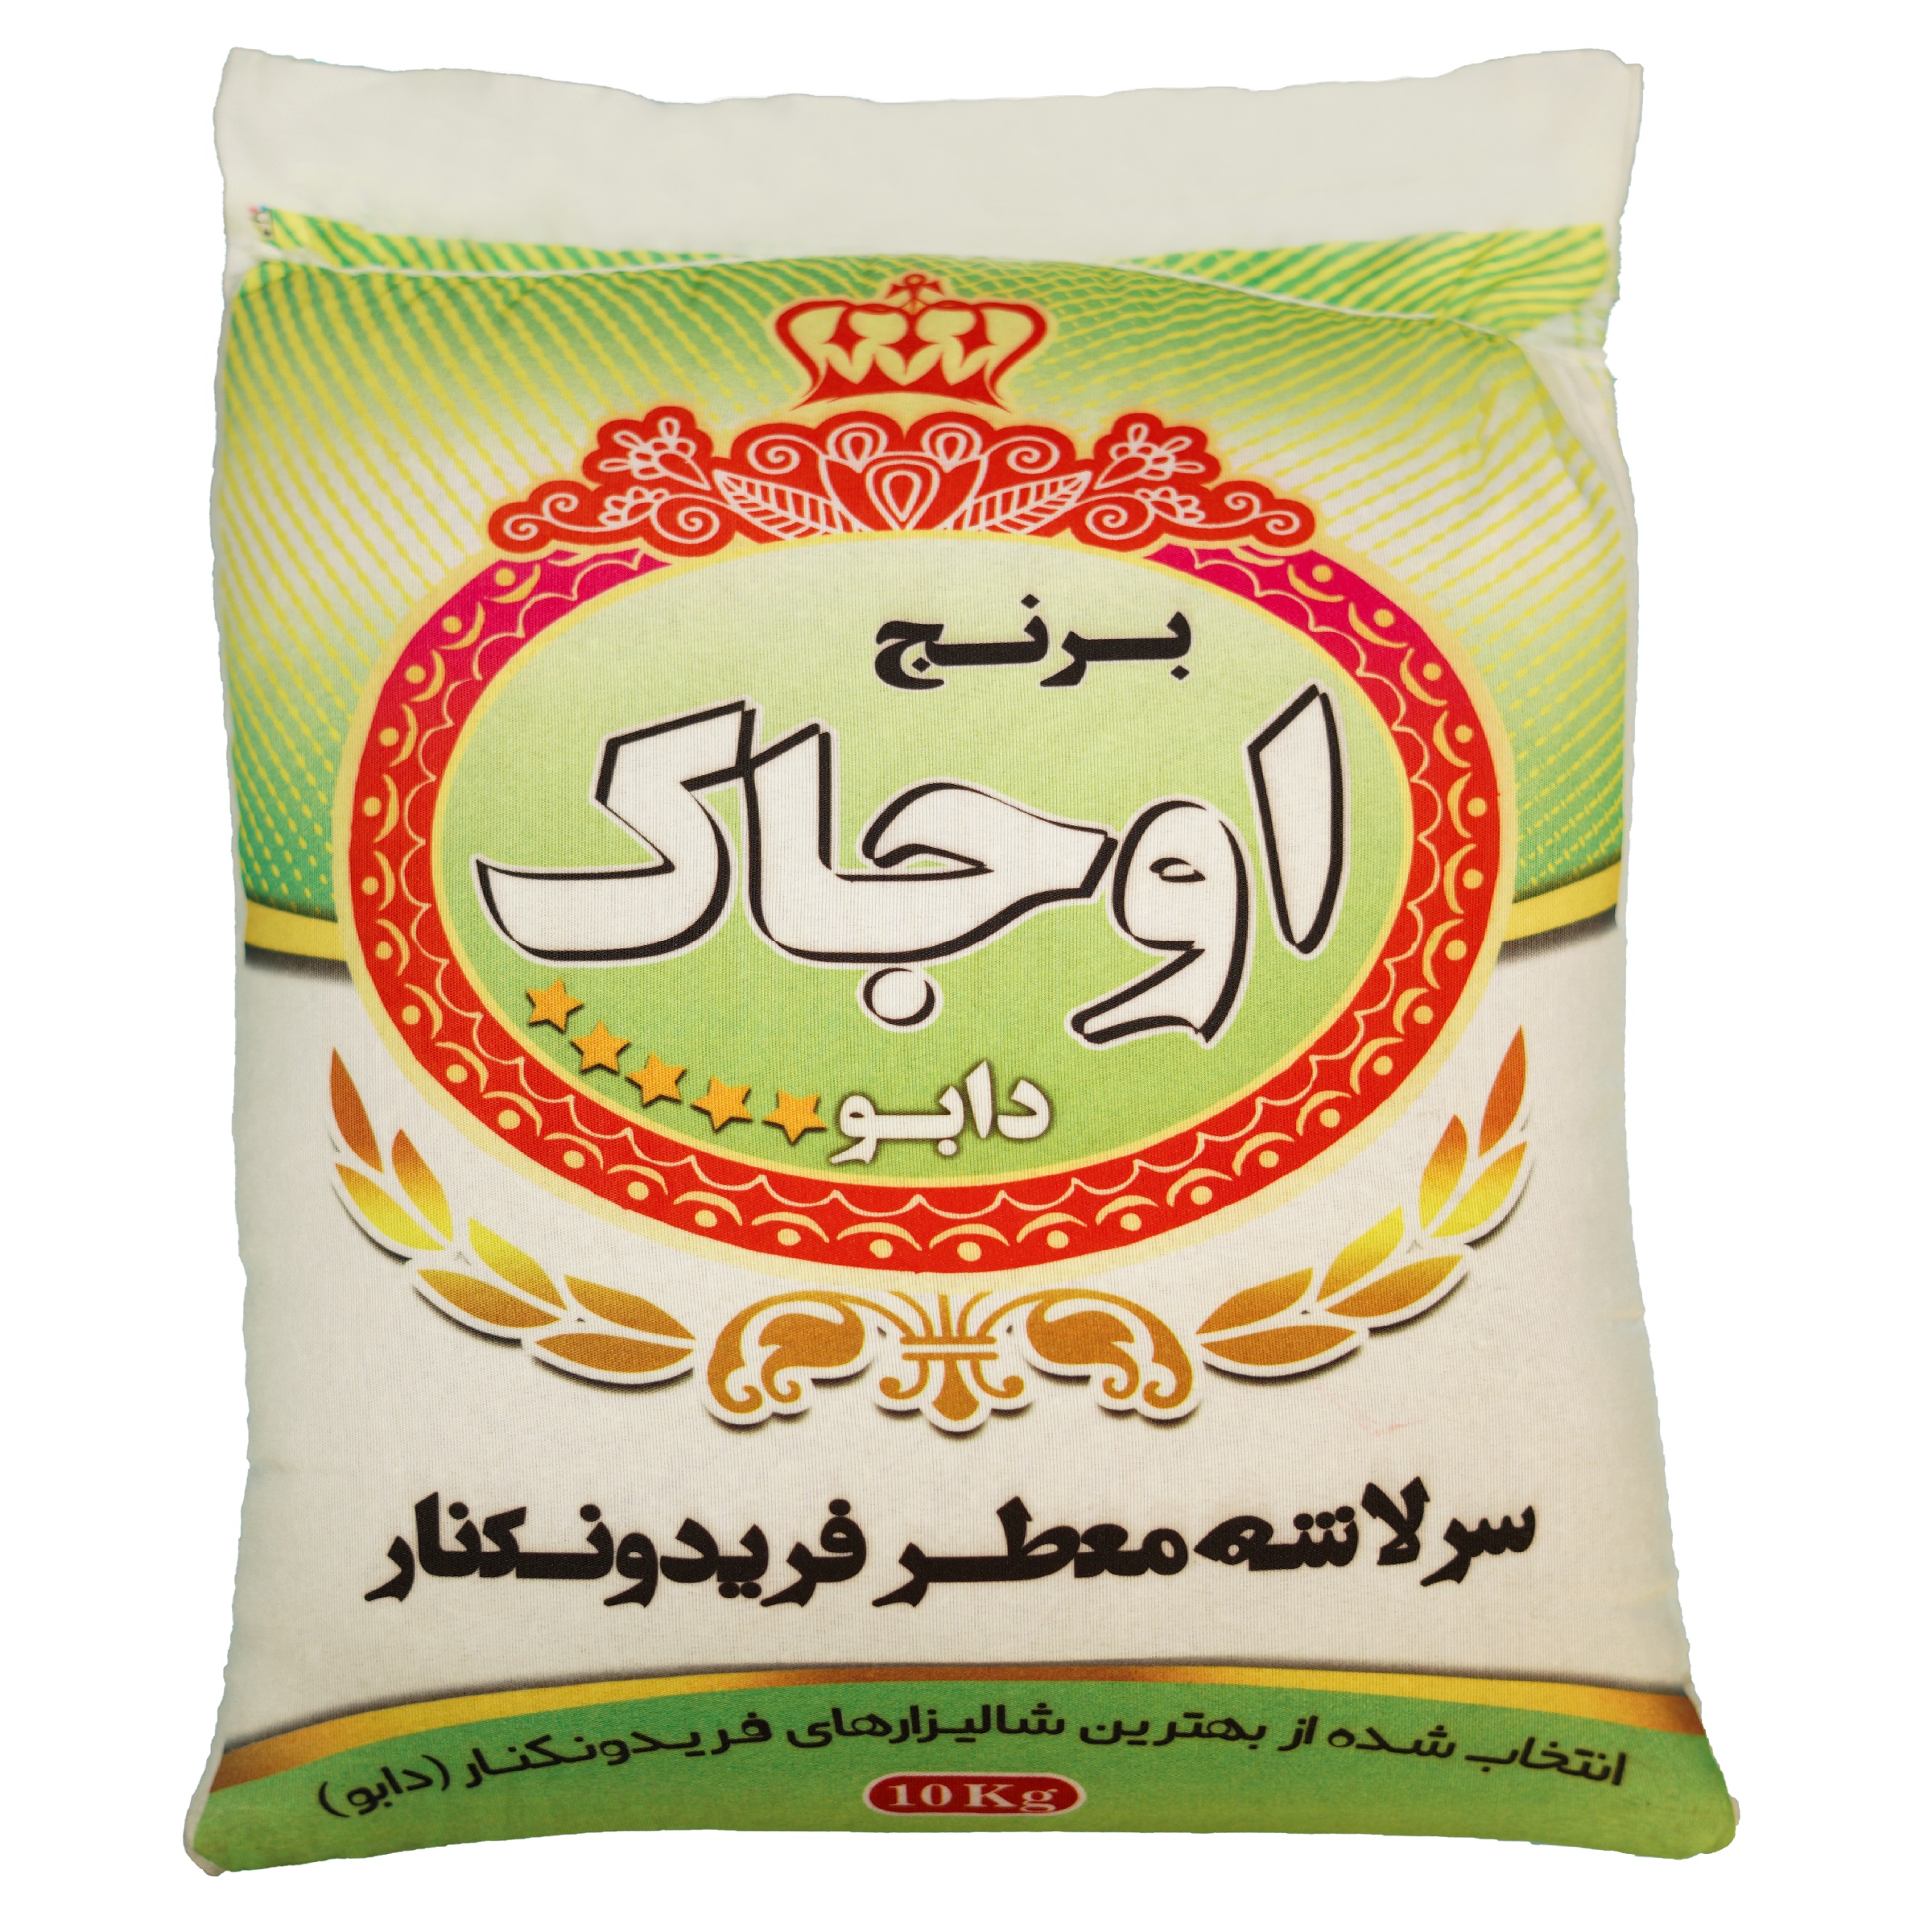 نکته خرید - قیمت روز برنج سرلاشه معطر فریدونکنار اوجاک - 10 کیلوگرم خرید